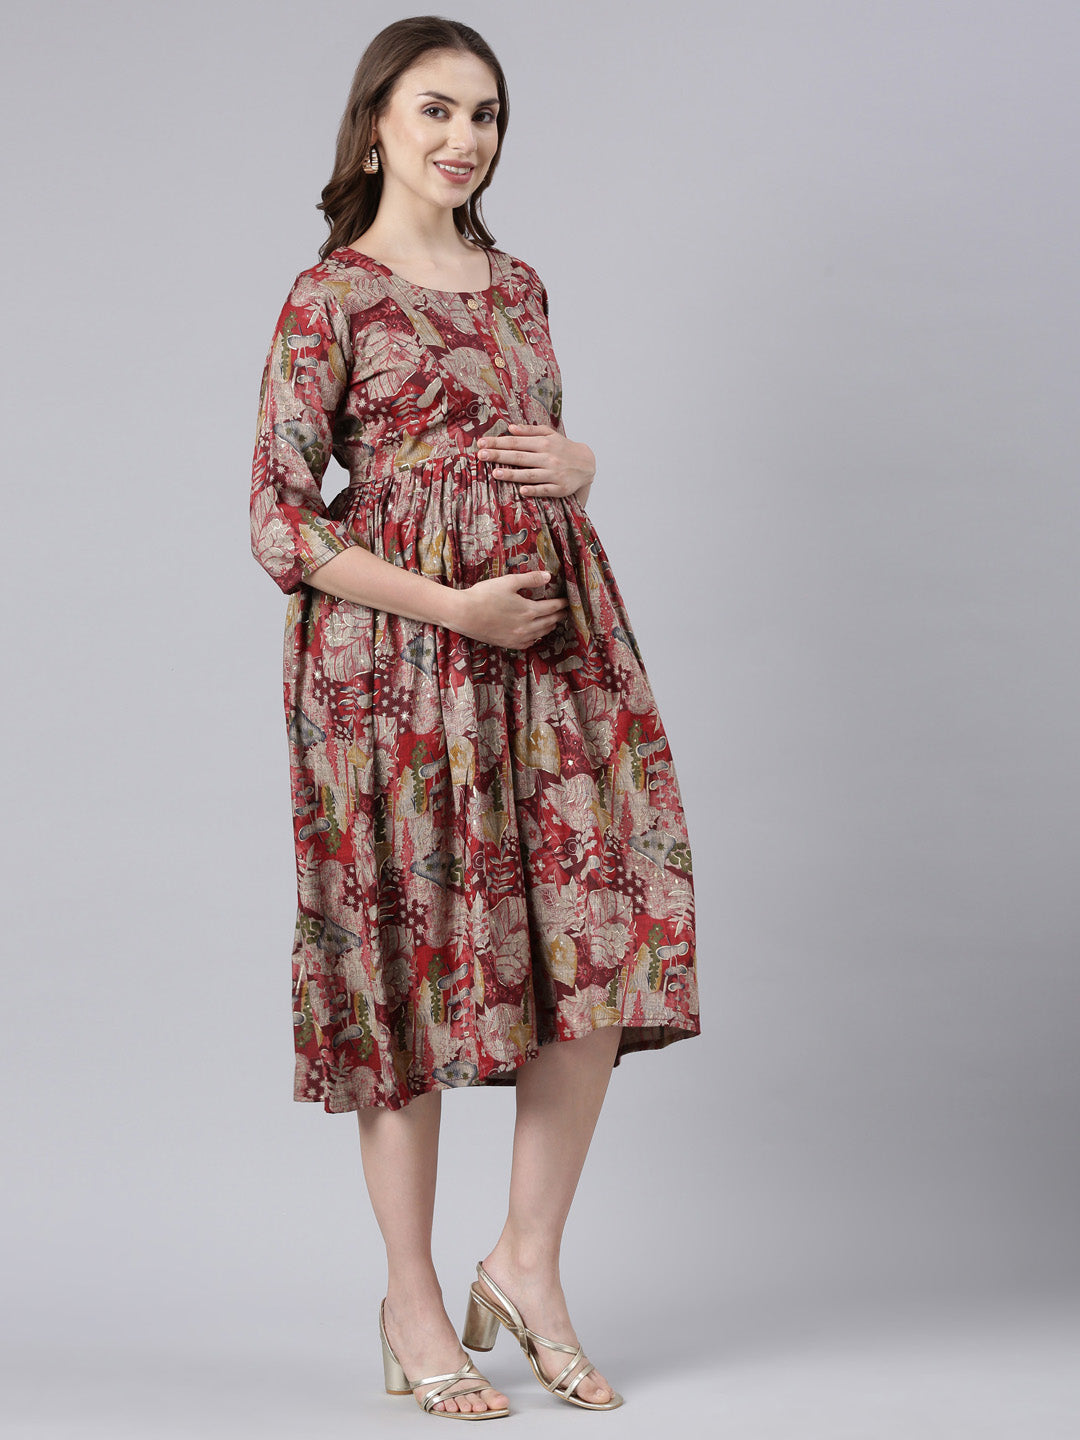 Rosewood maternity and feeding dress